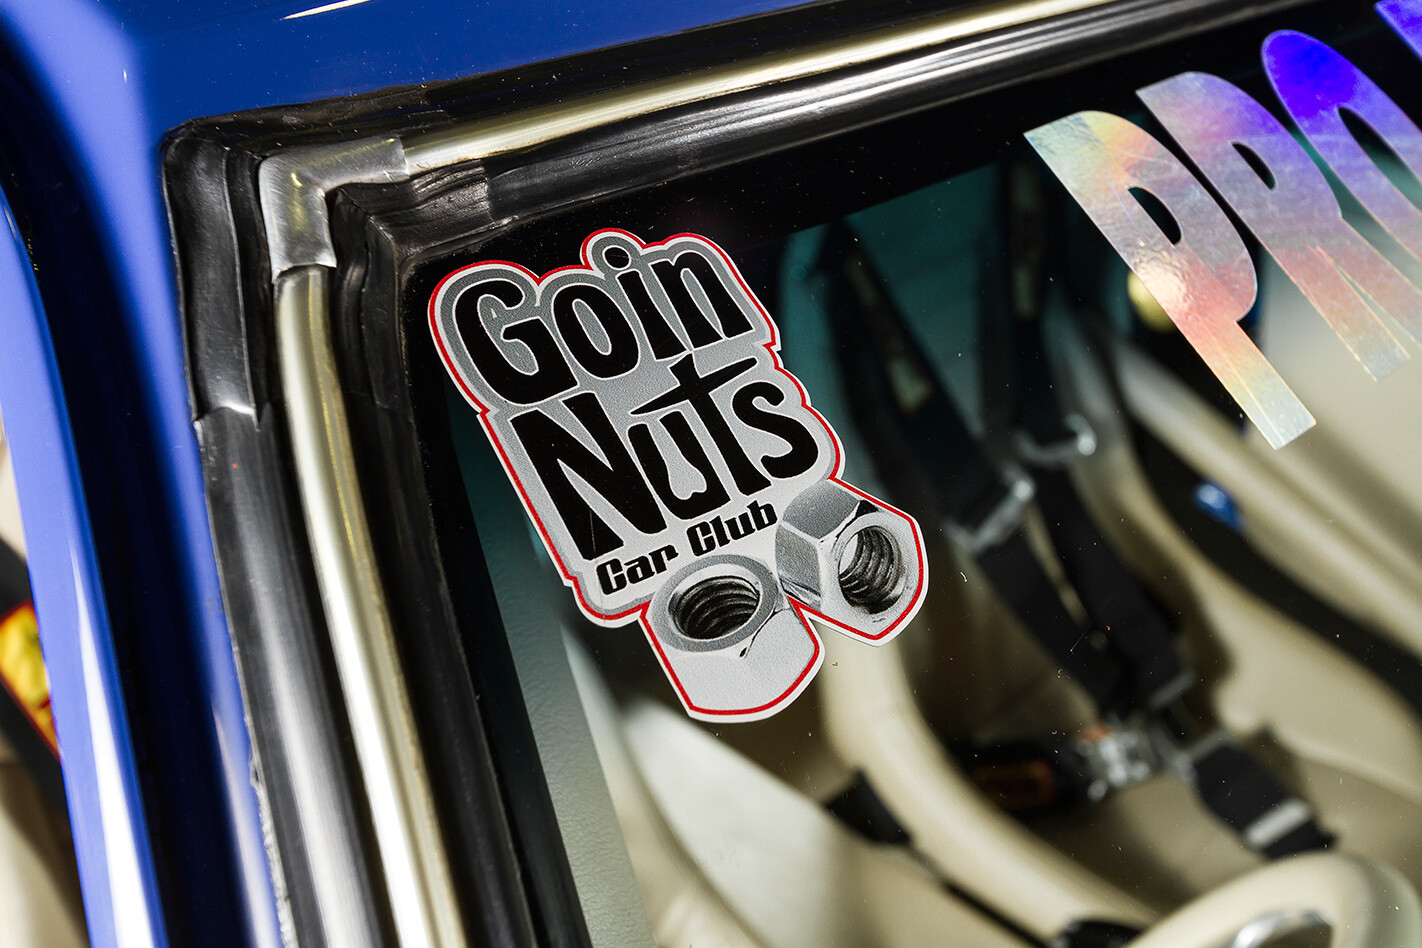 Goin Nuts car club sticker